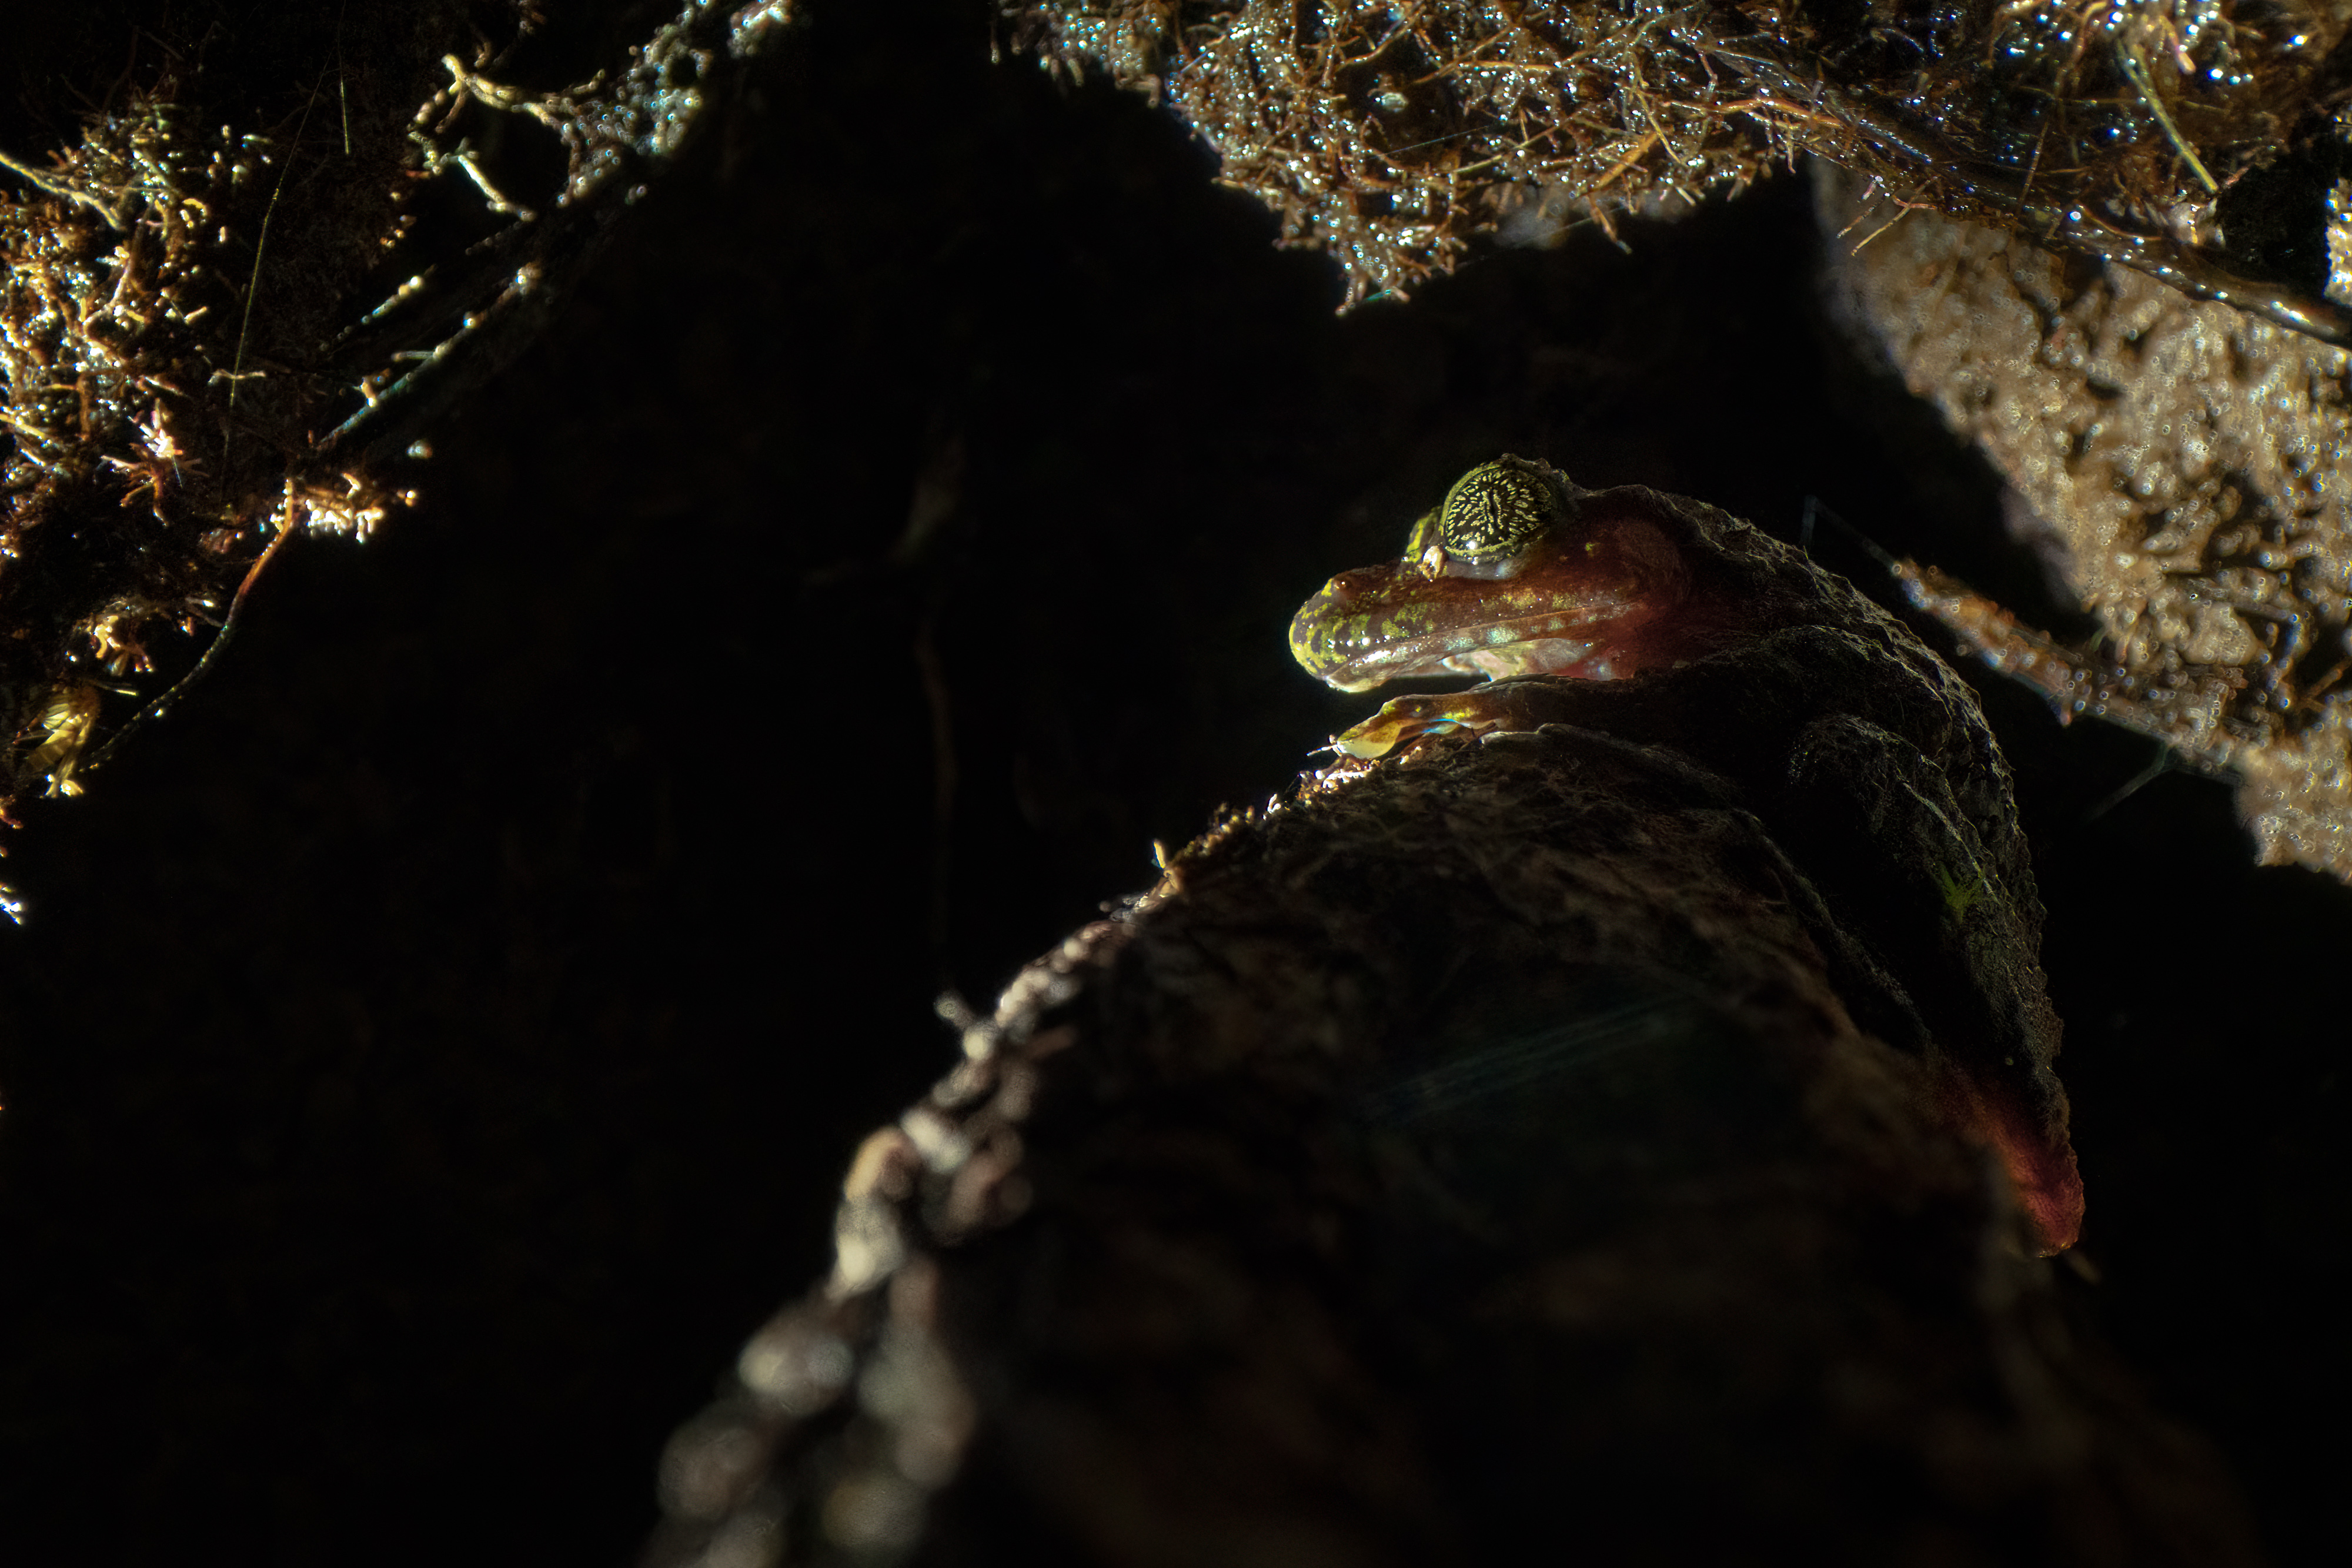 https://www.amphibians.org/wp-content/uploads/2022/09/ghost-frog-night-jeremy-shelton.jpg